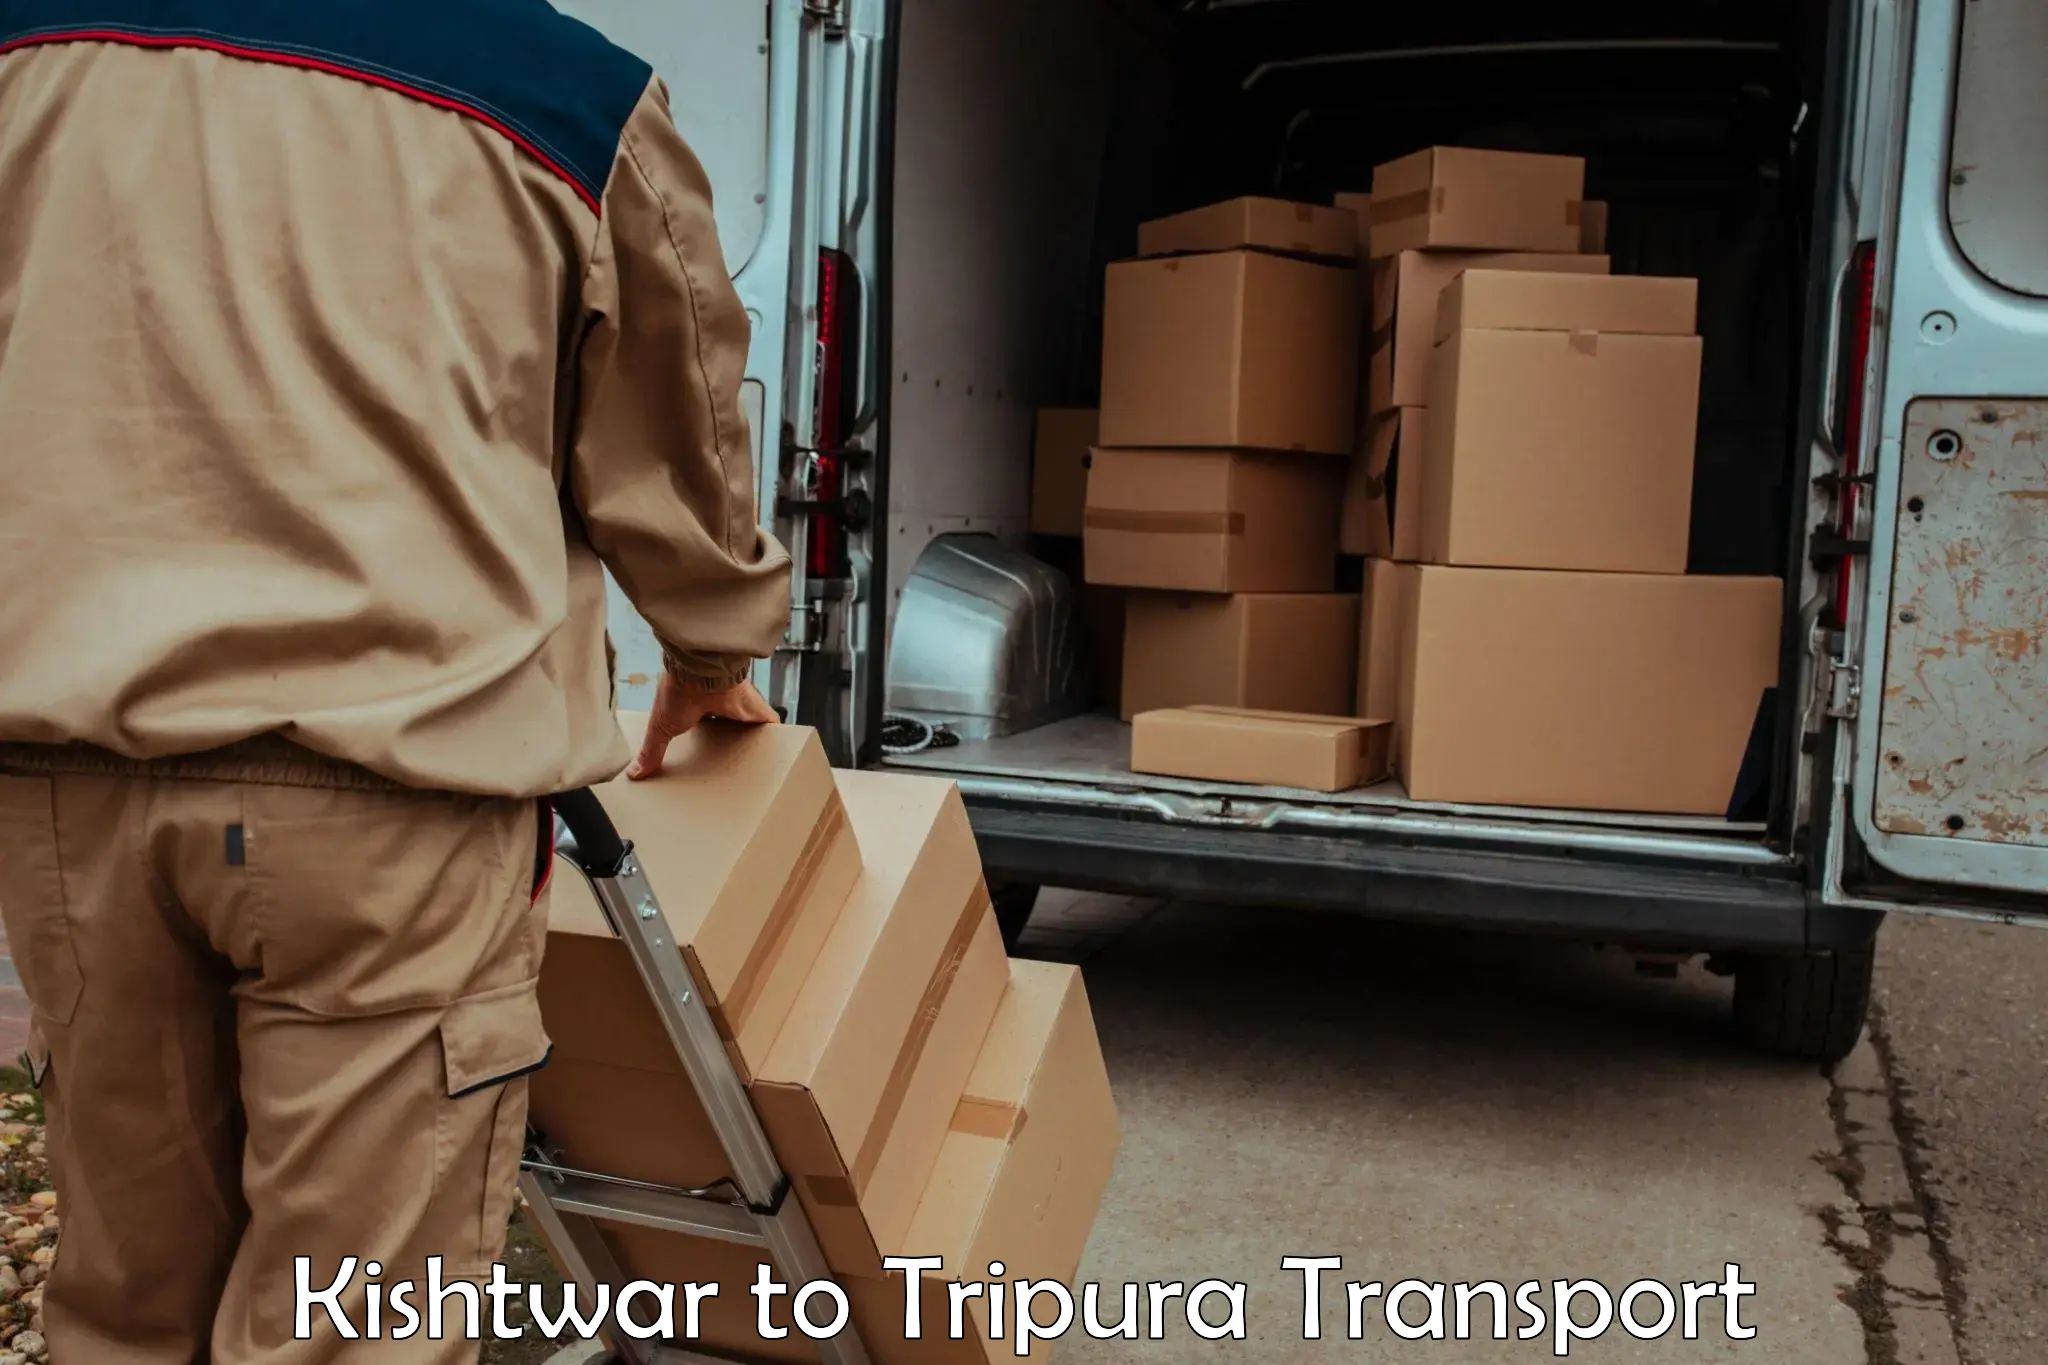 Delivery service in Kishtwar to Udaipur Tripura